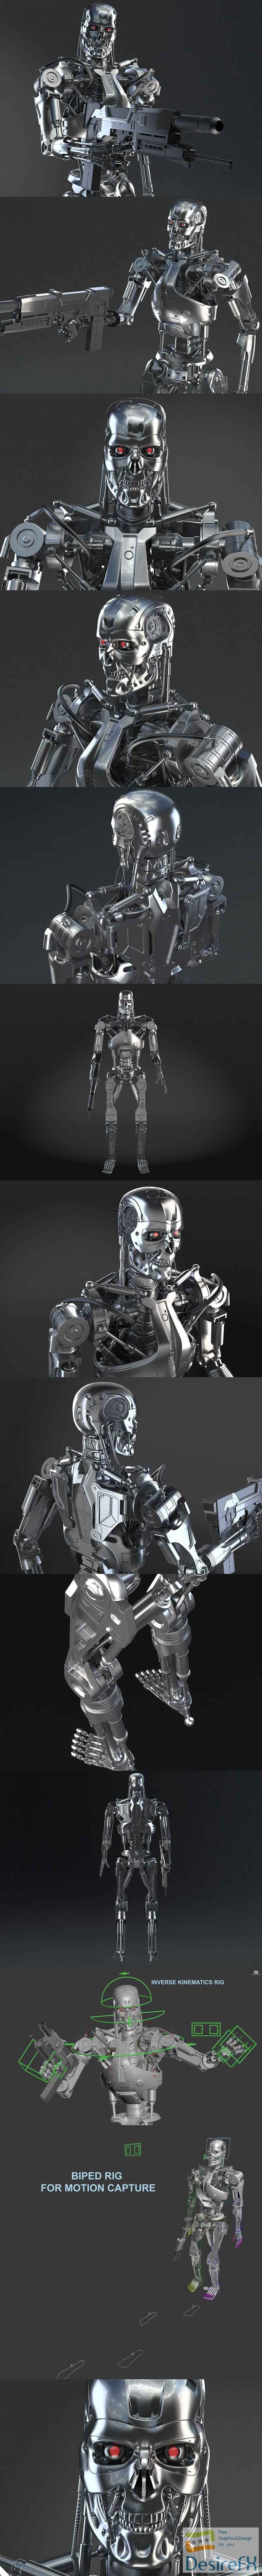 Terminator T800 3D Model